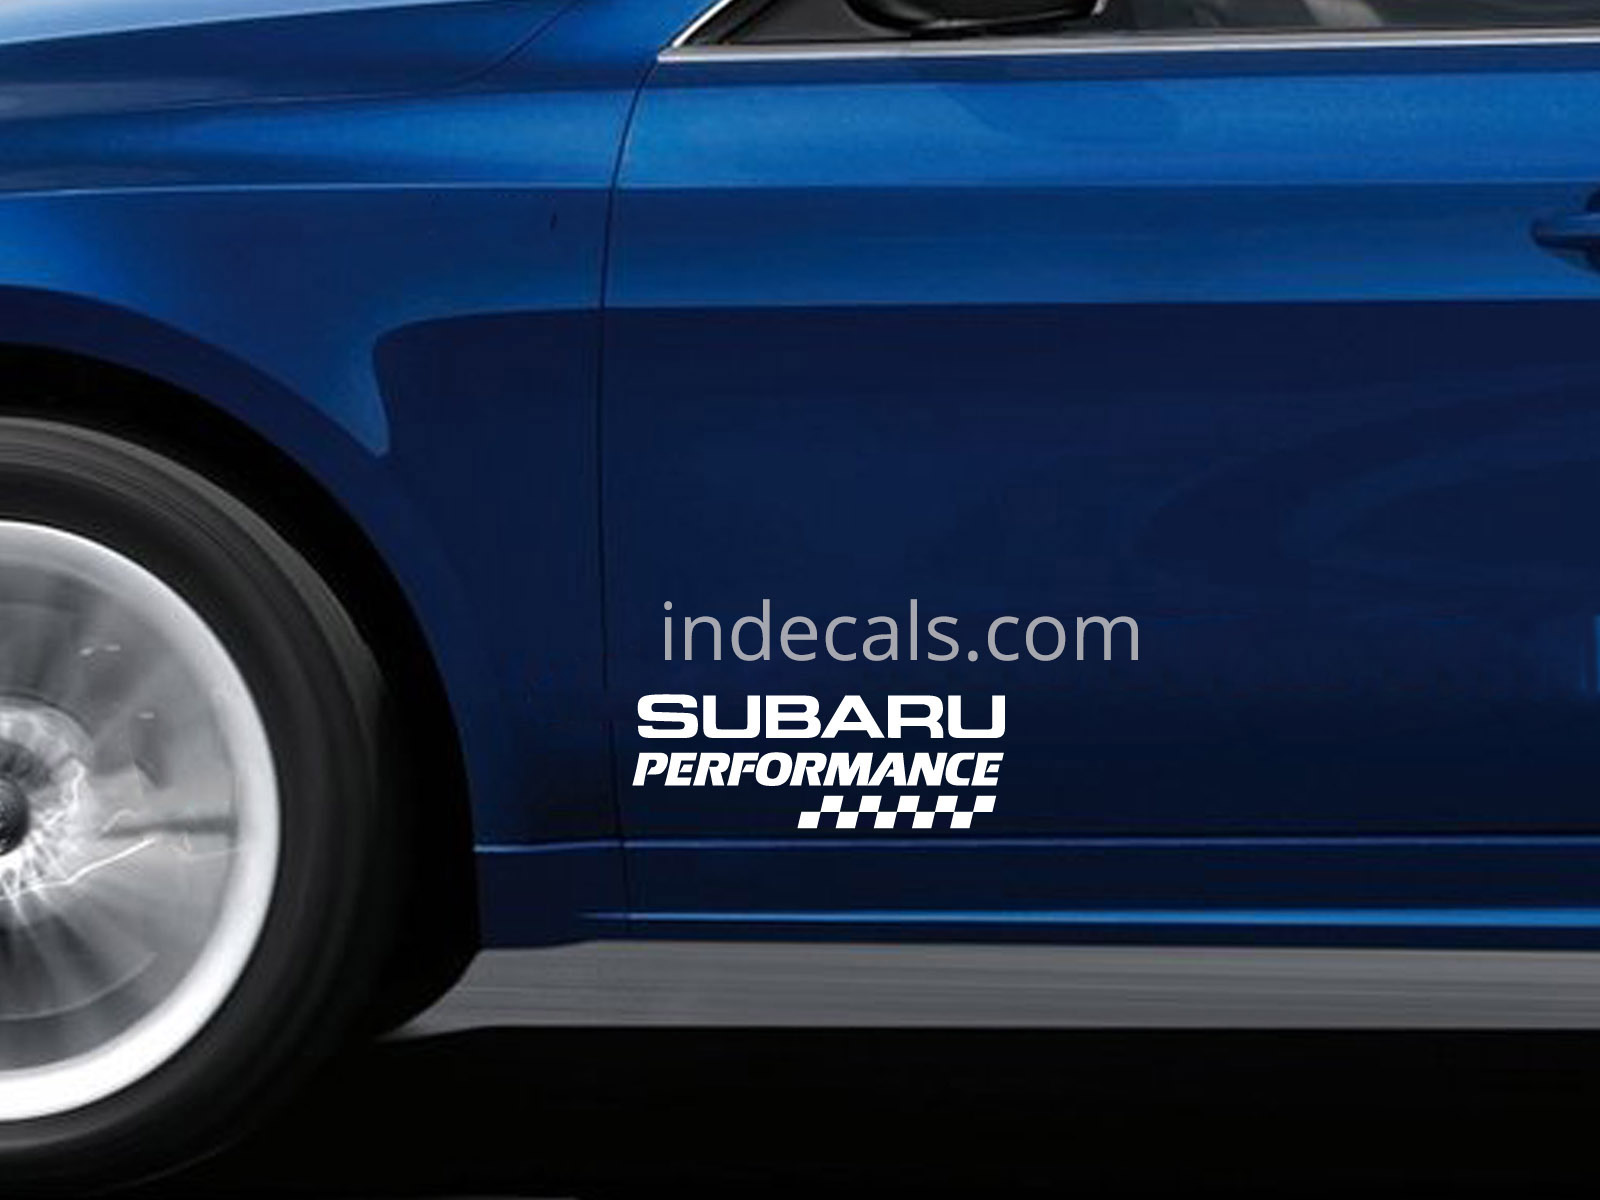 2 x Subaru Performance Stickers for Doors - White